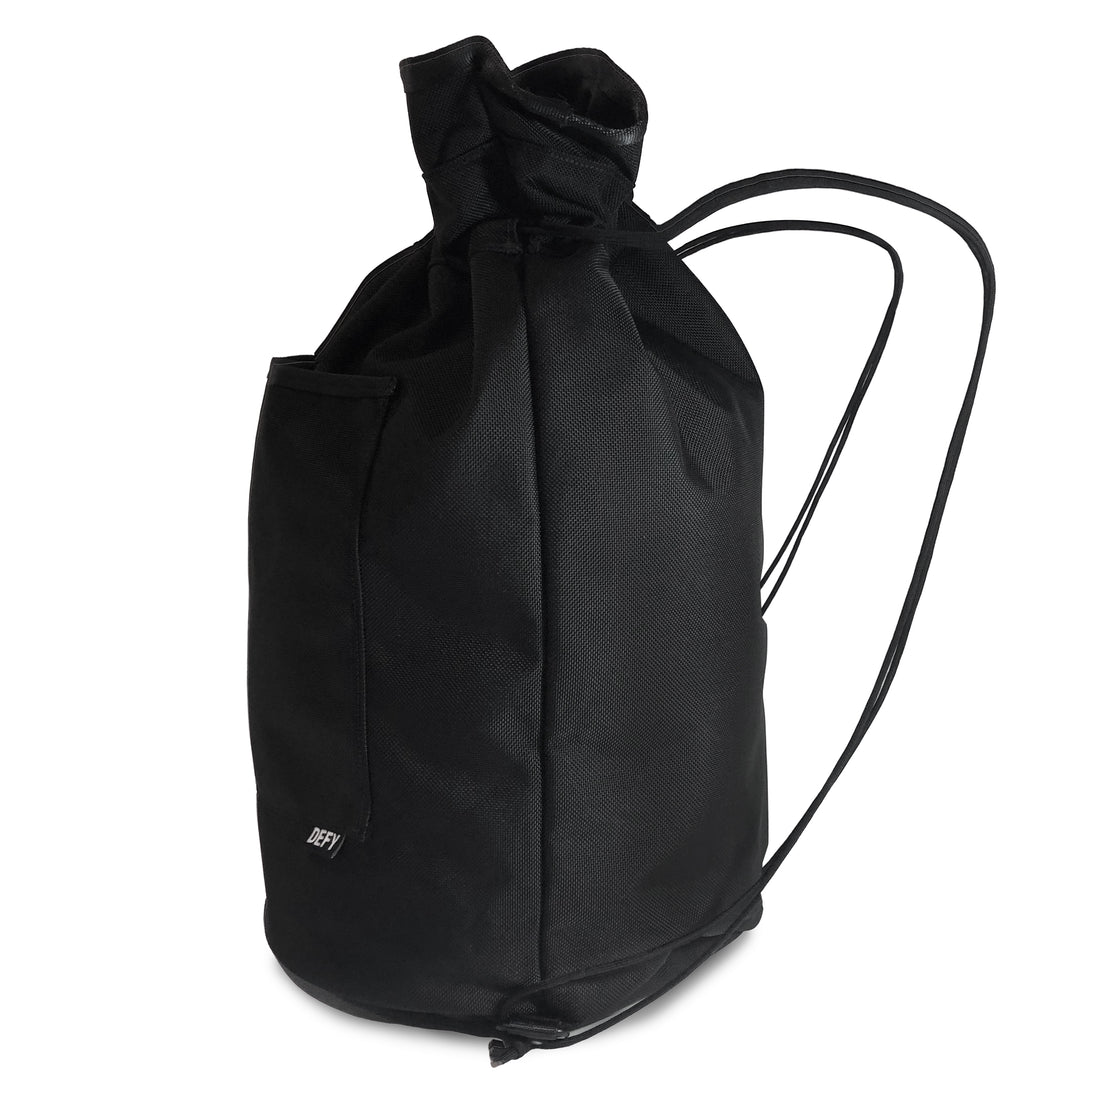 Black Bucket Bag